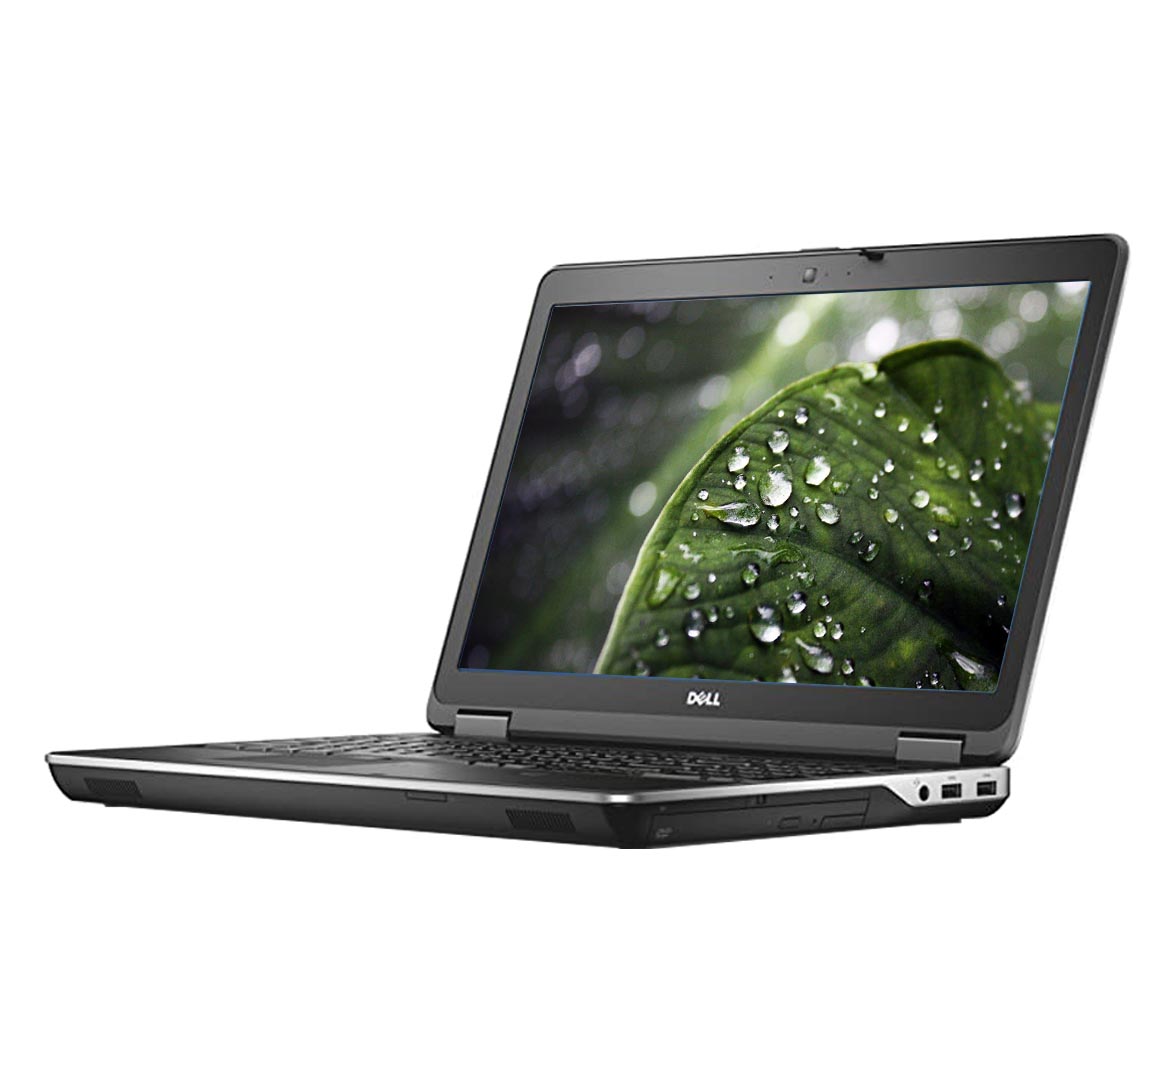 Dell Latitude E6540 Business Laptop, Intel Core i7-4th Gen CPU, 8GB RAM, 256GB SSD, 15.6 inch Display, Windows 10 Pro, Refurbished Laptop